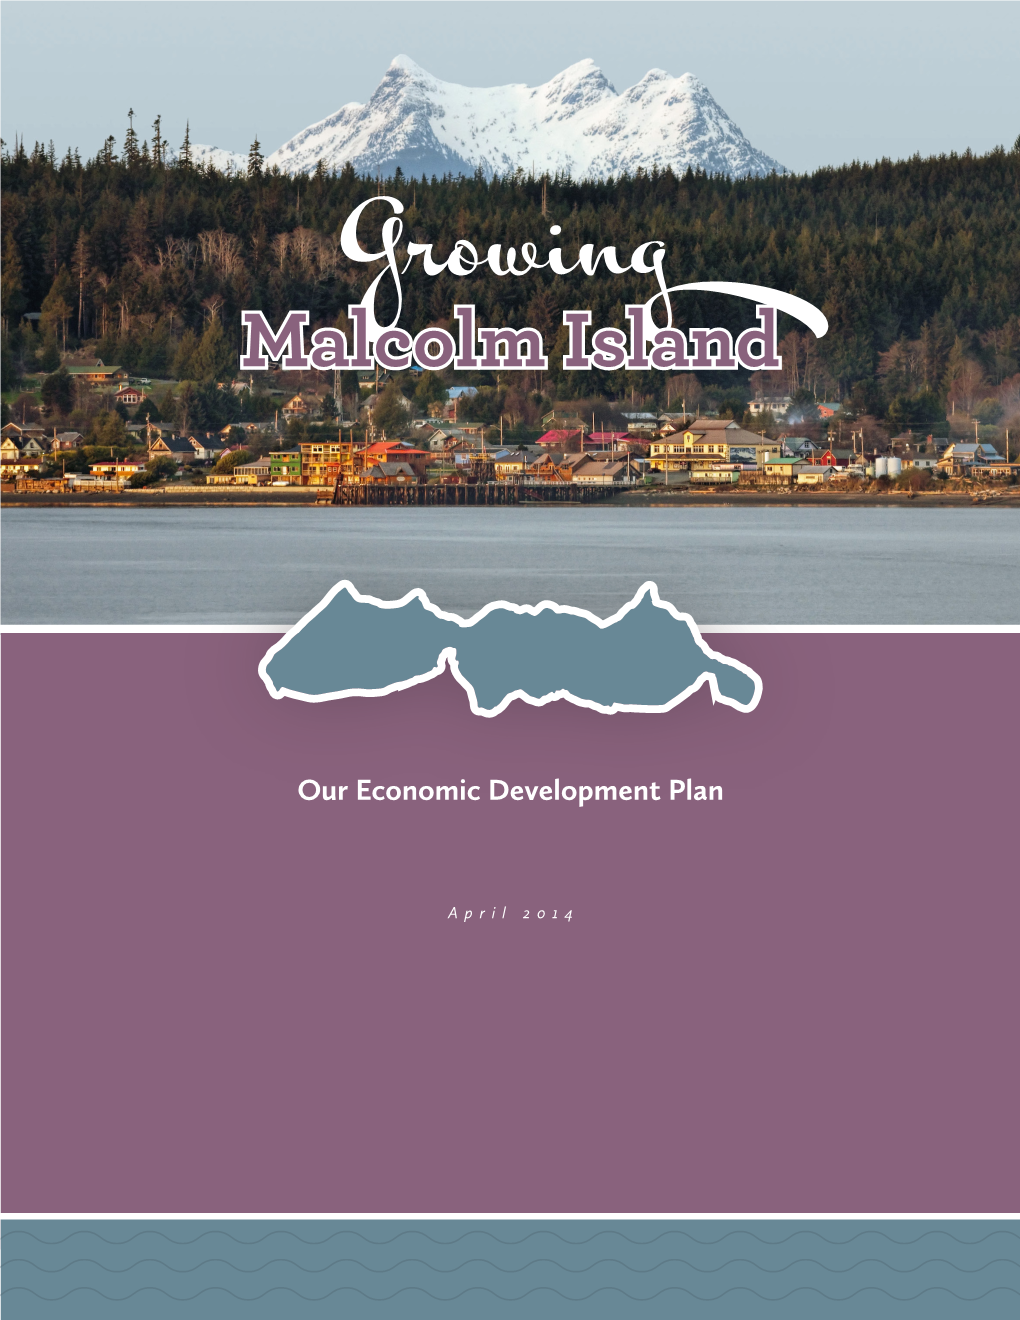 Growing Malcolm Island-Our Economic Development Plan 2014